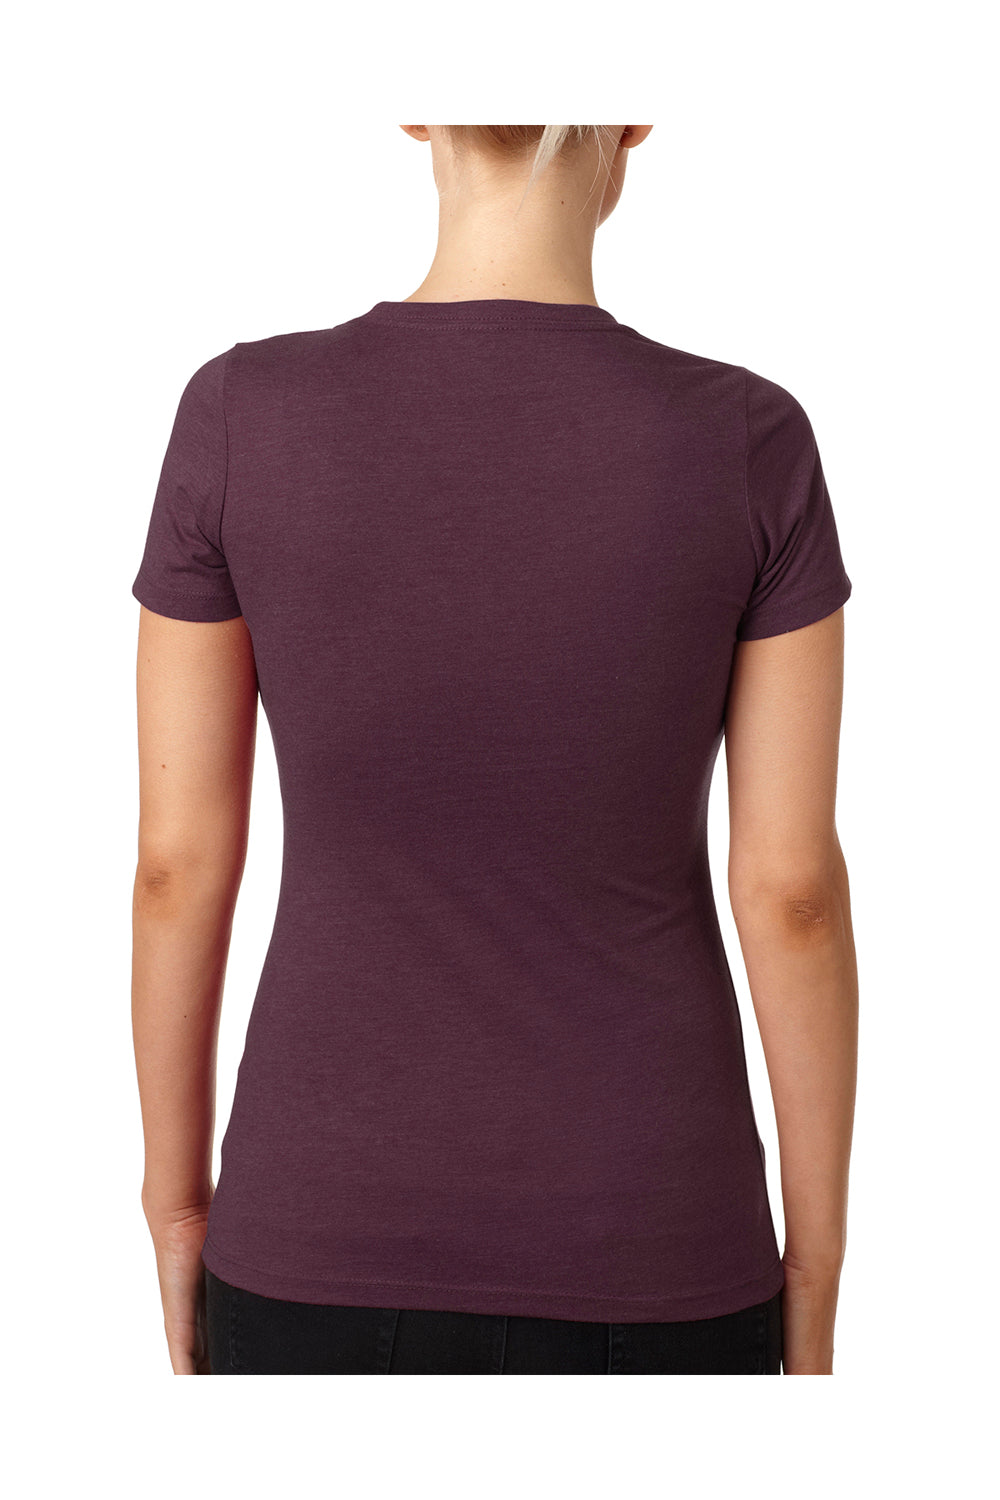 Next Level 6610 Womens CVC Jersey Short Sleeve Crewneck T-Shirt Plum Purple Back